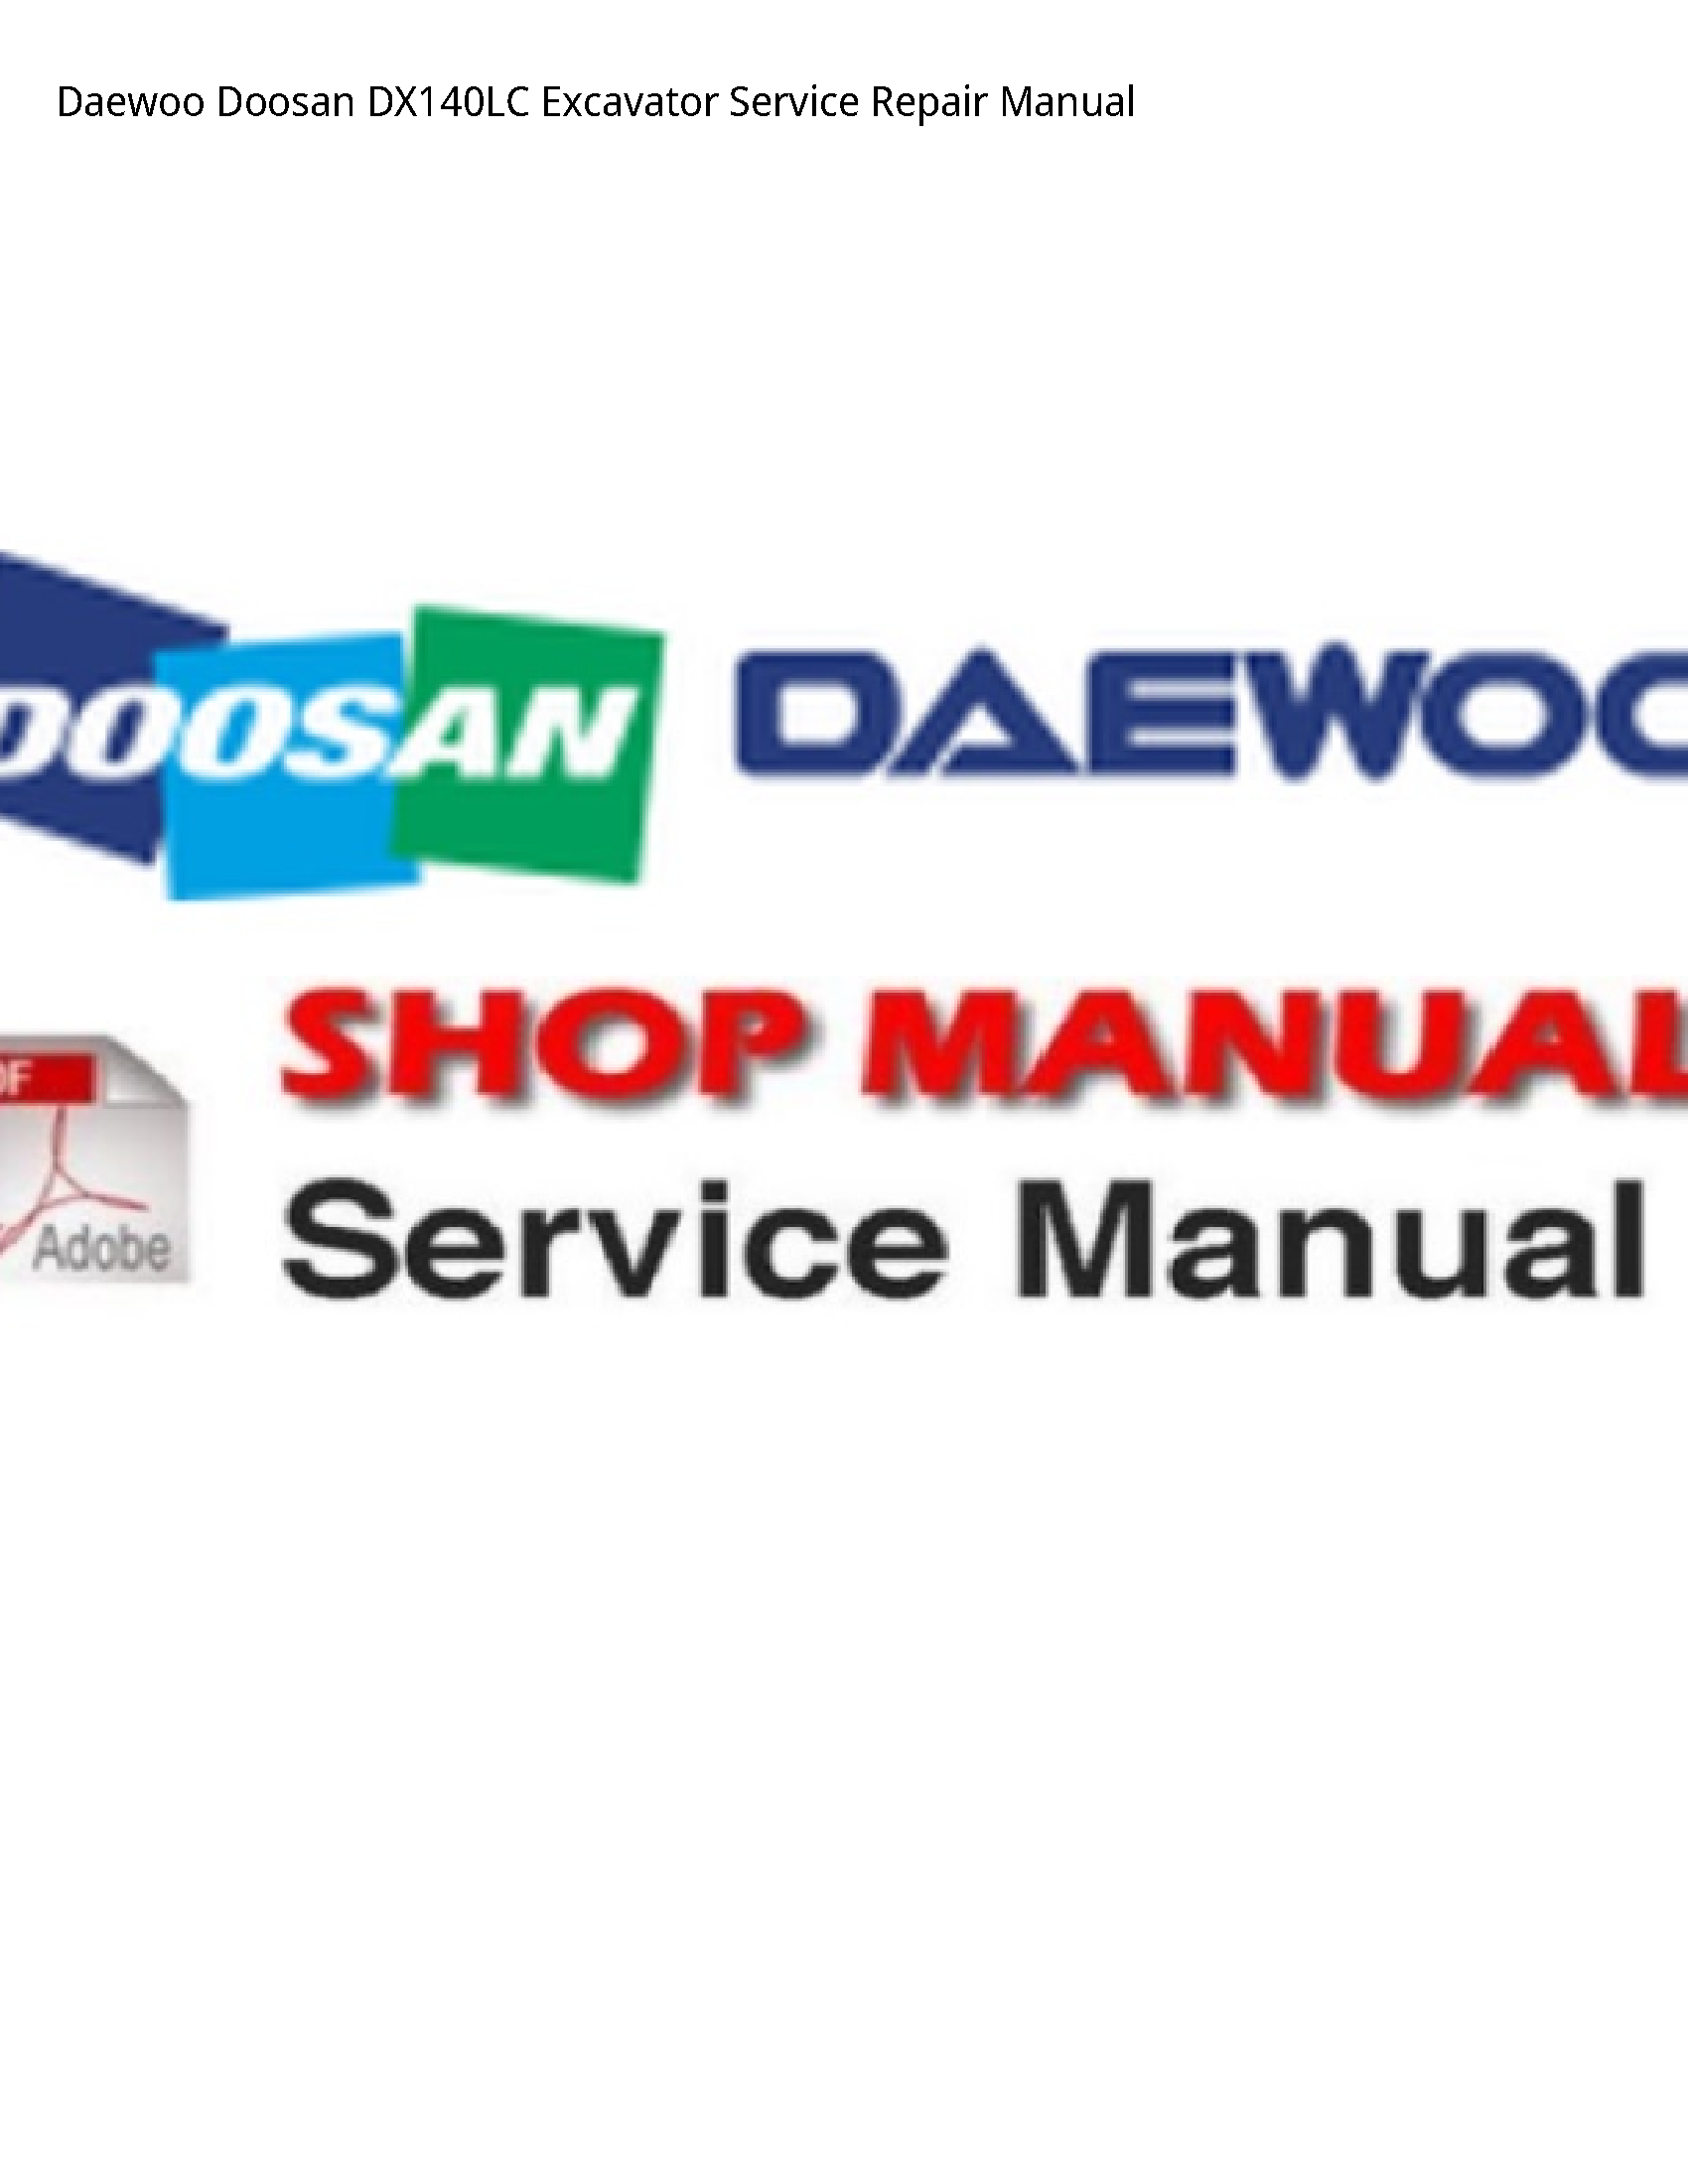 Daewoo Doosan DX140LC Excavator manual